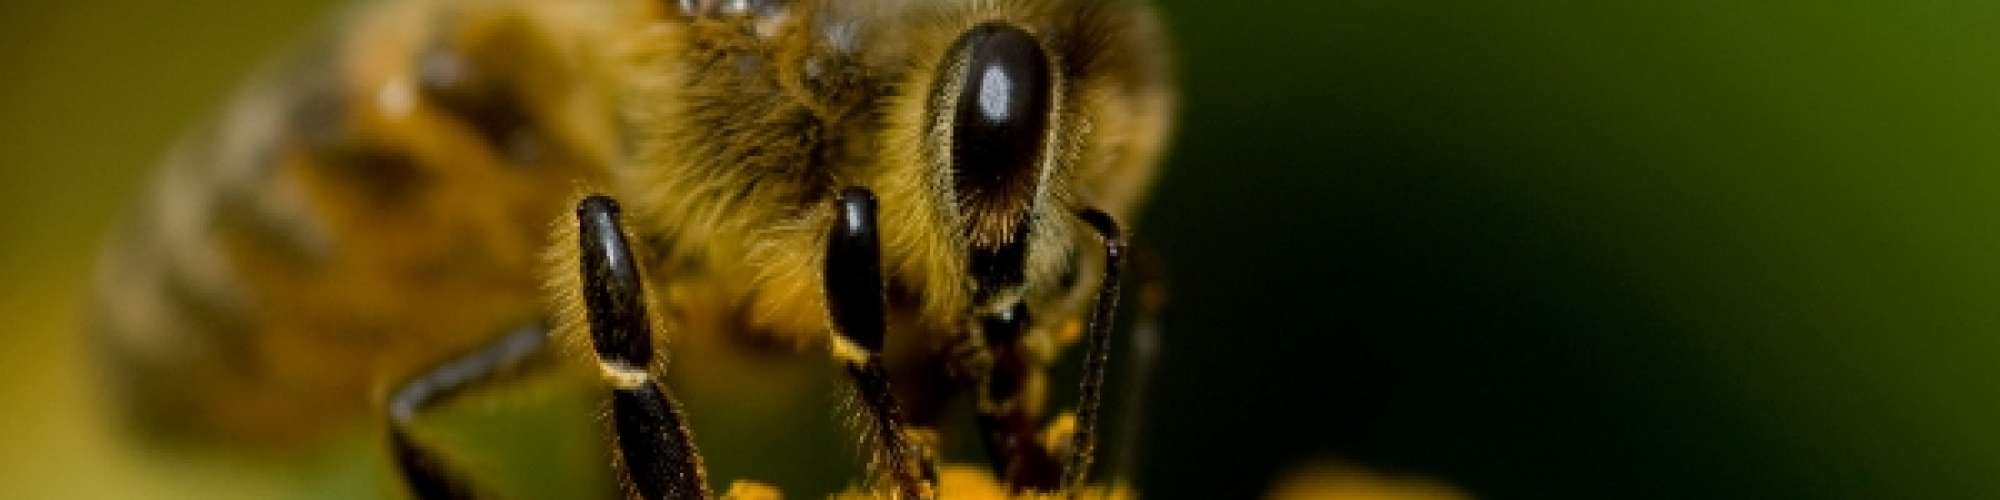 Bee big pic